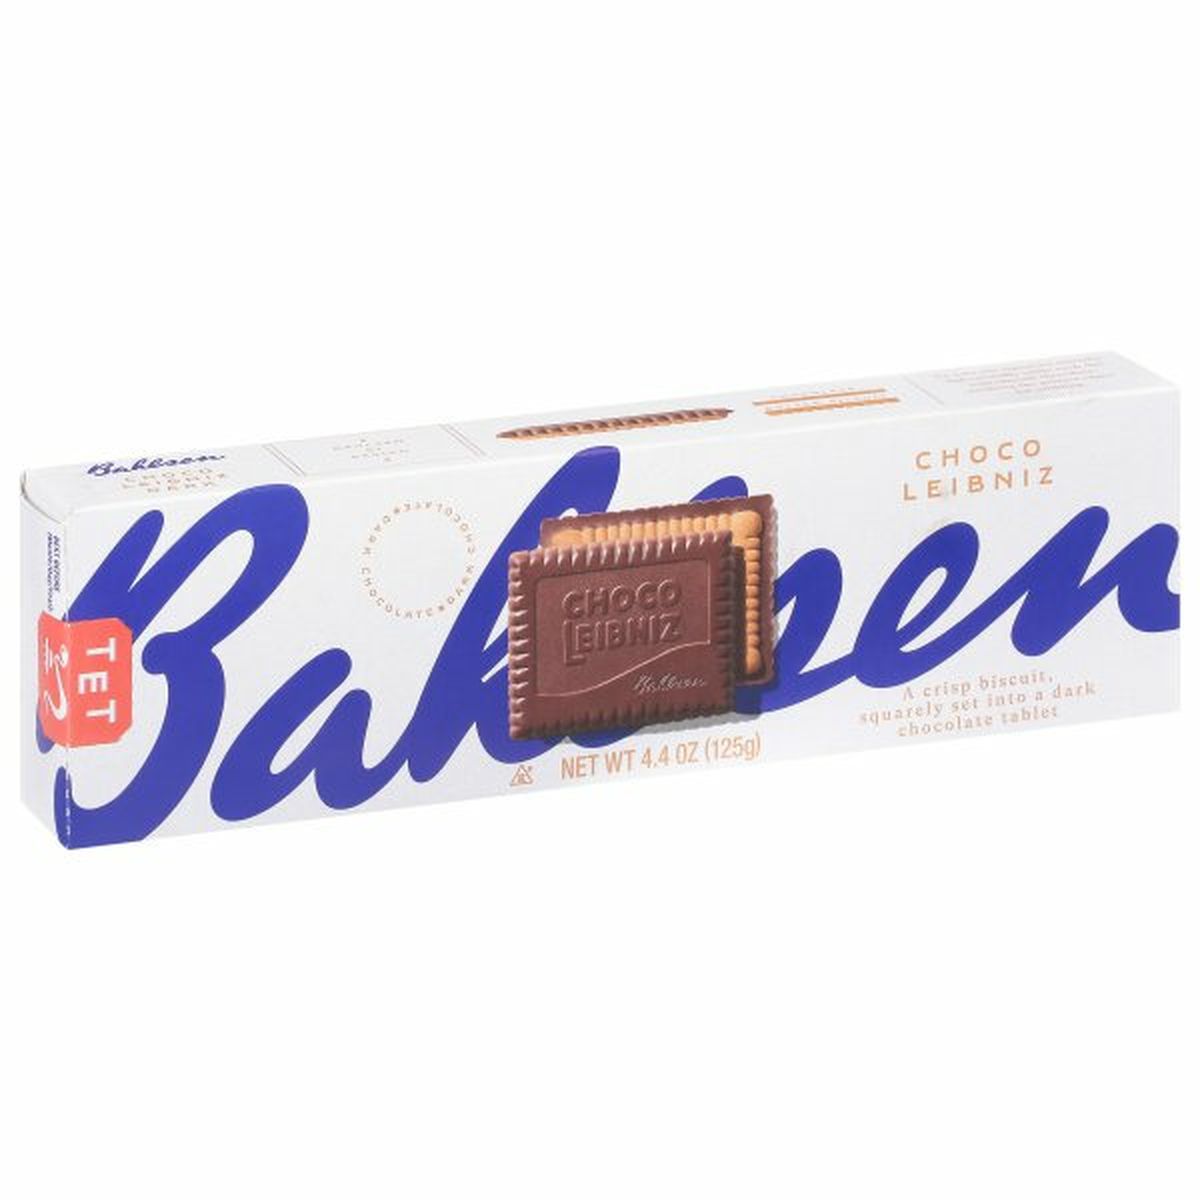 Calories in Bahlsen Choco Leibniz, Dark Chocolate